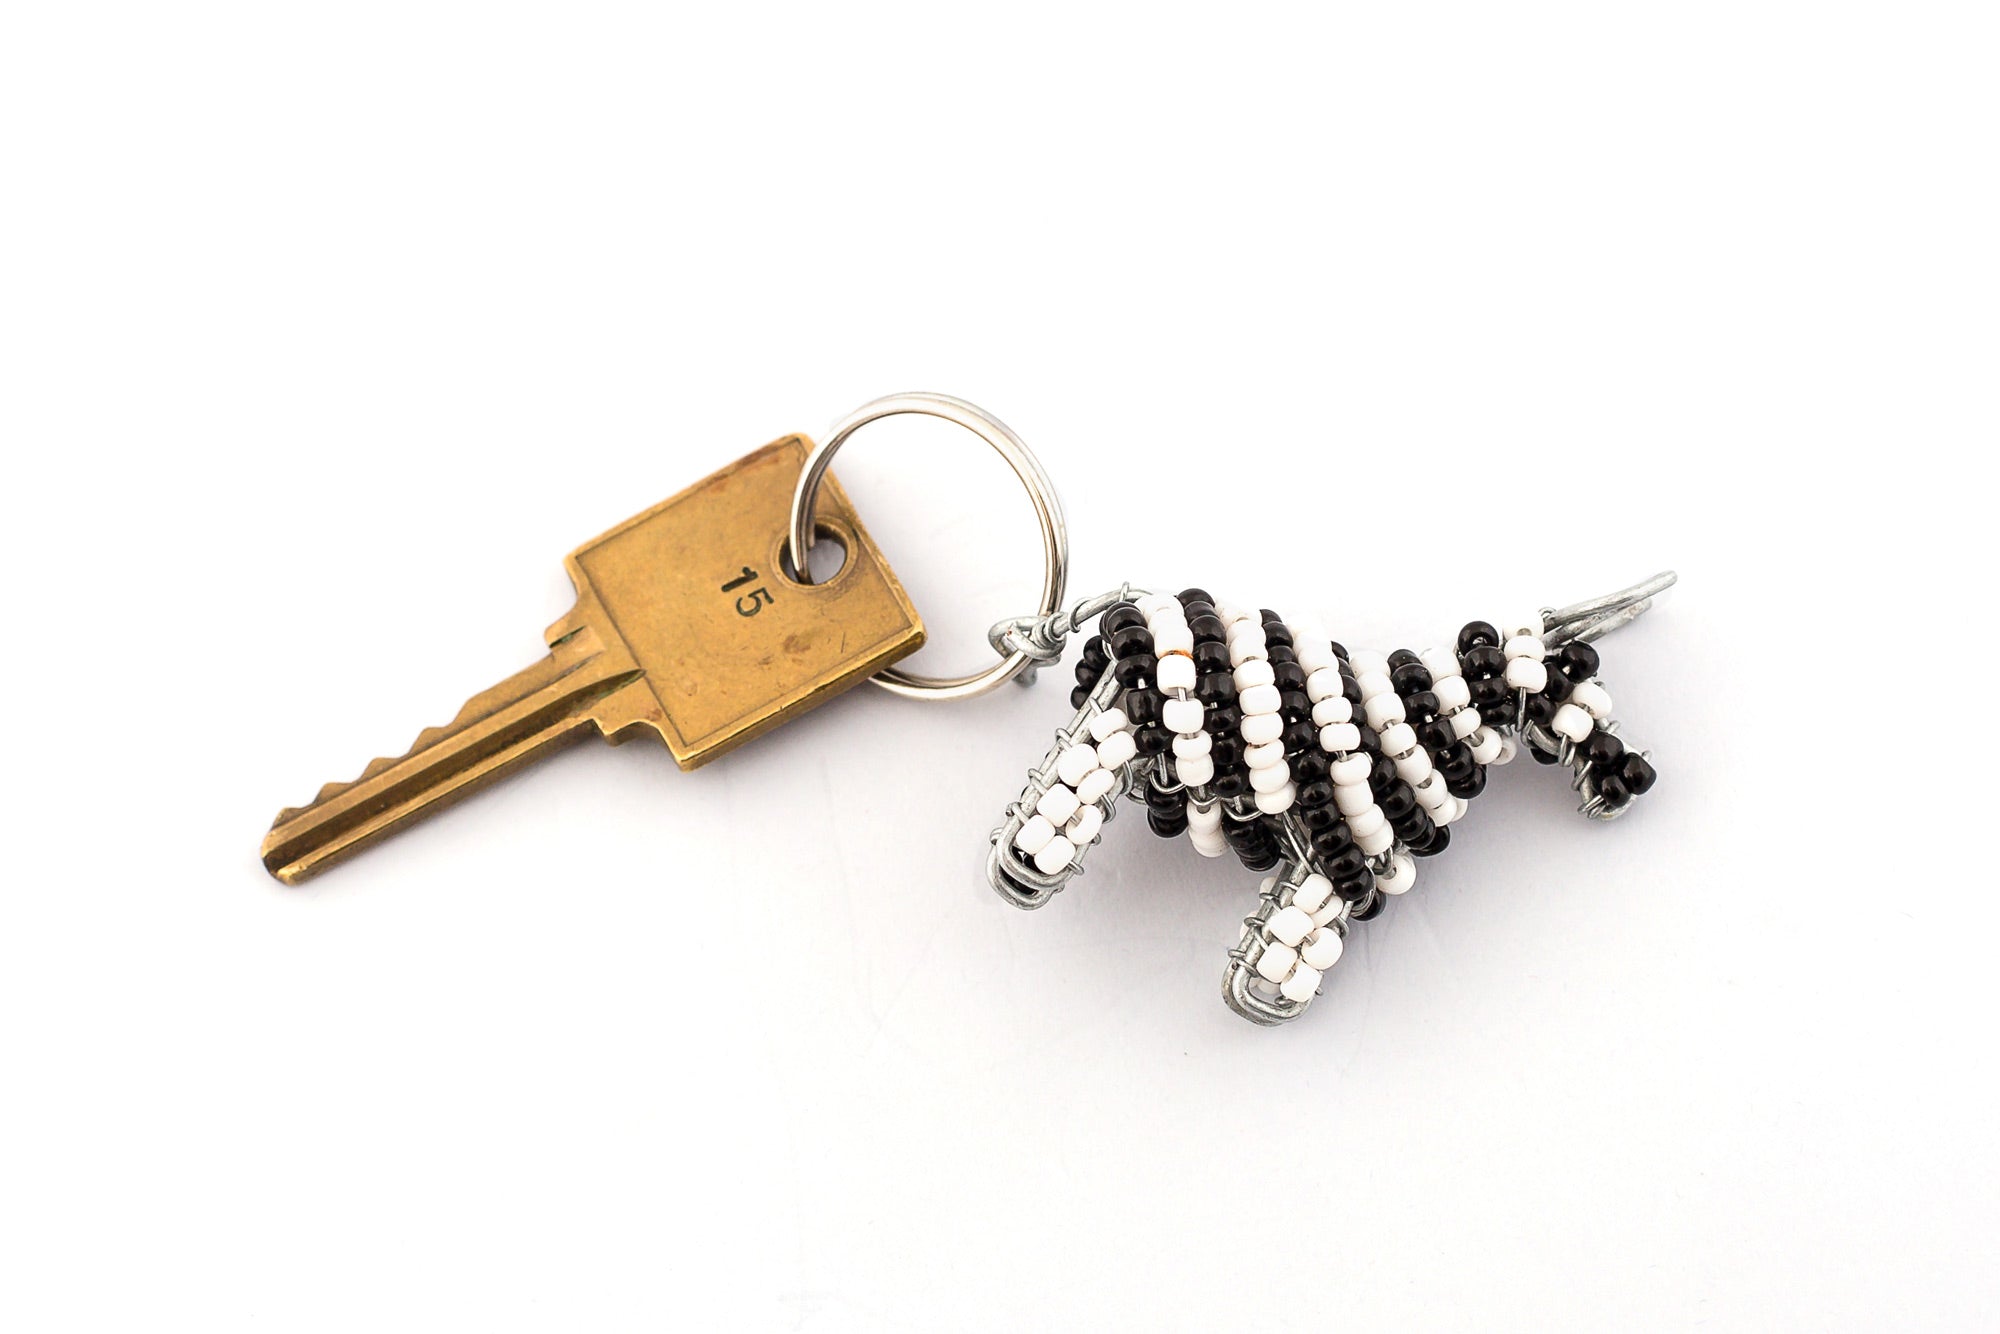 Beaded zebra key chain. Handmade in white and black stripes.  Fair trade gifts.